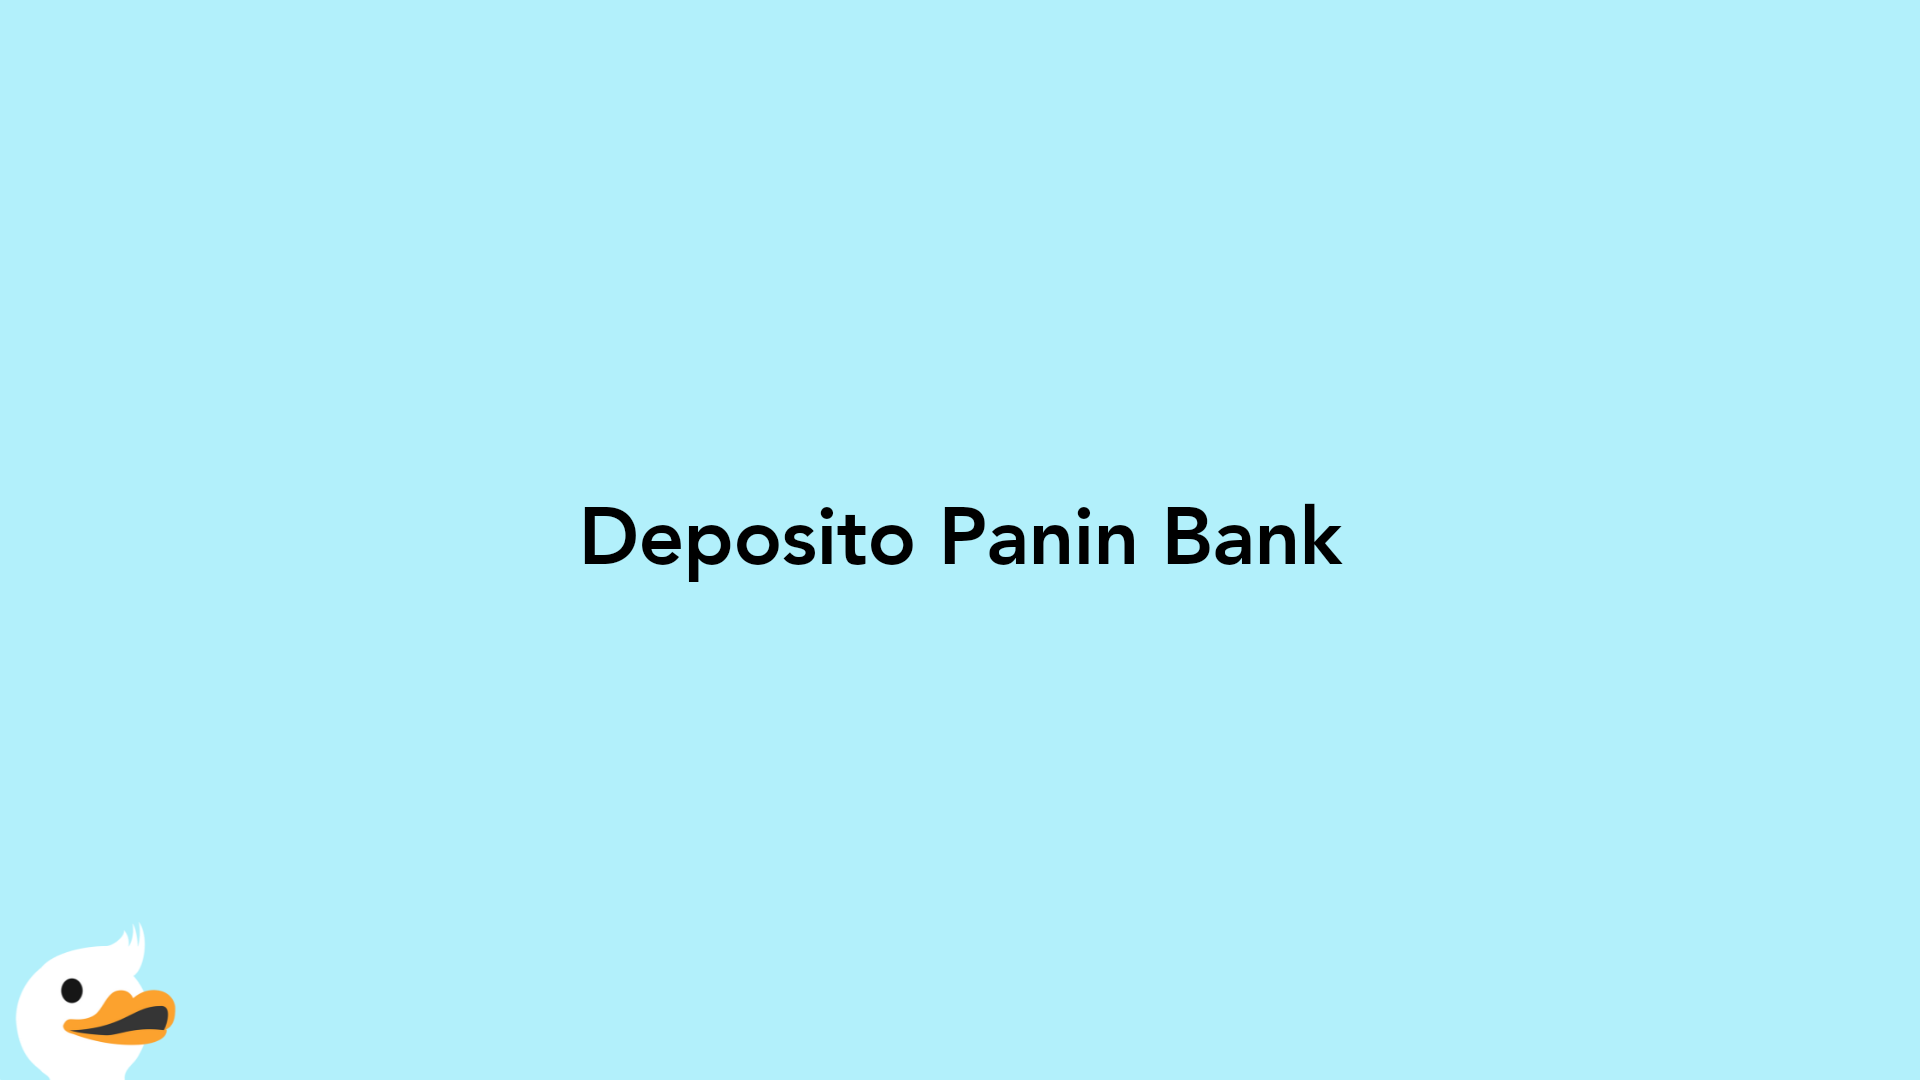 Deposito Panin Bank